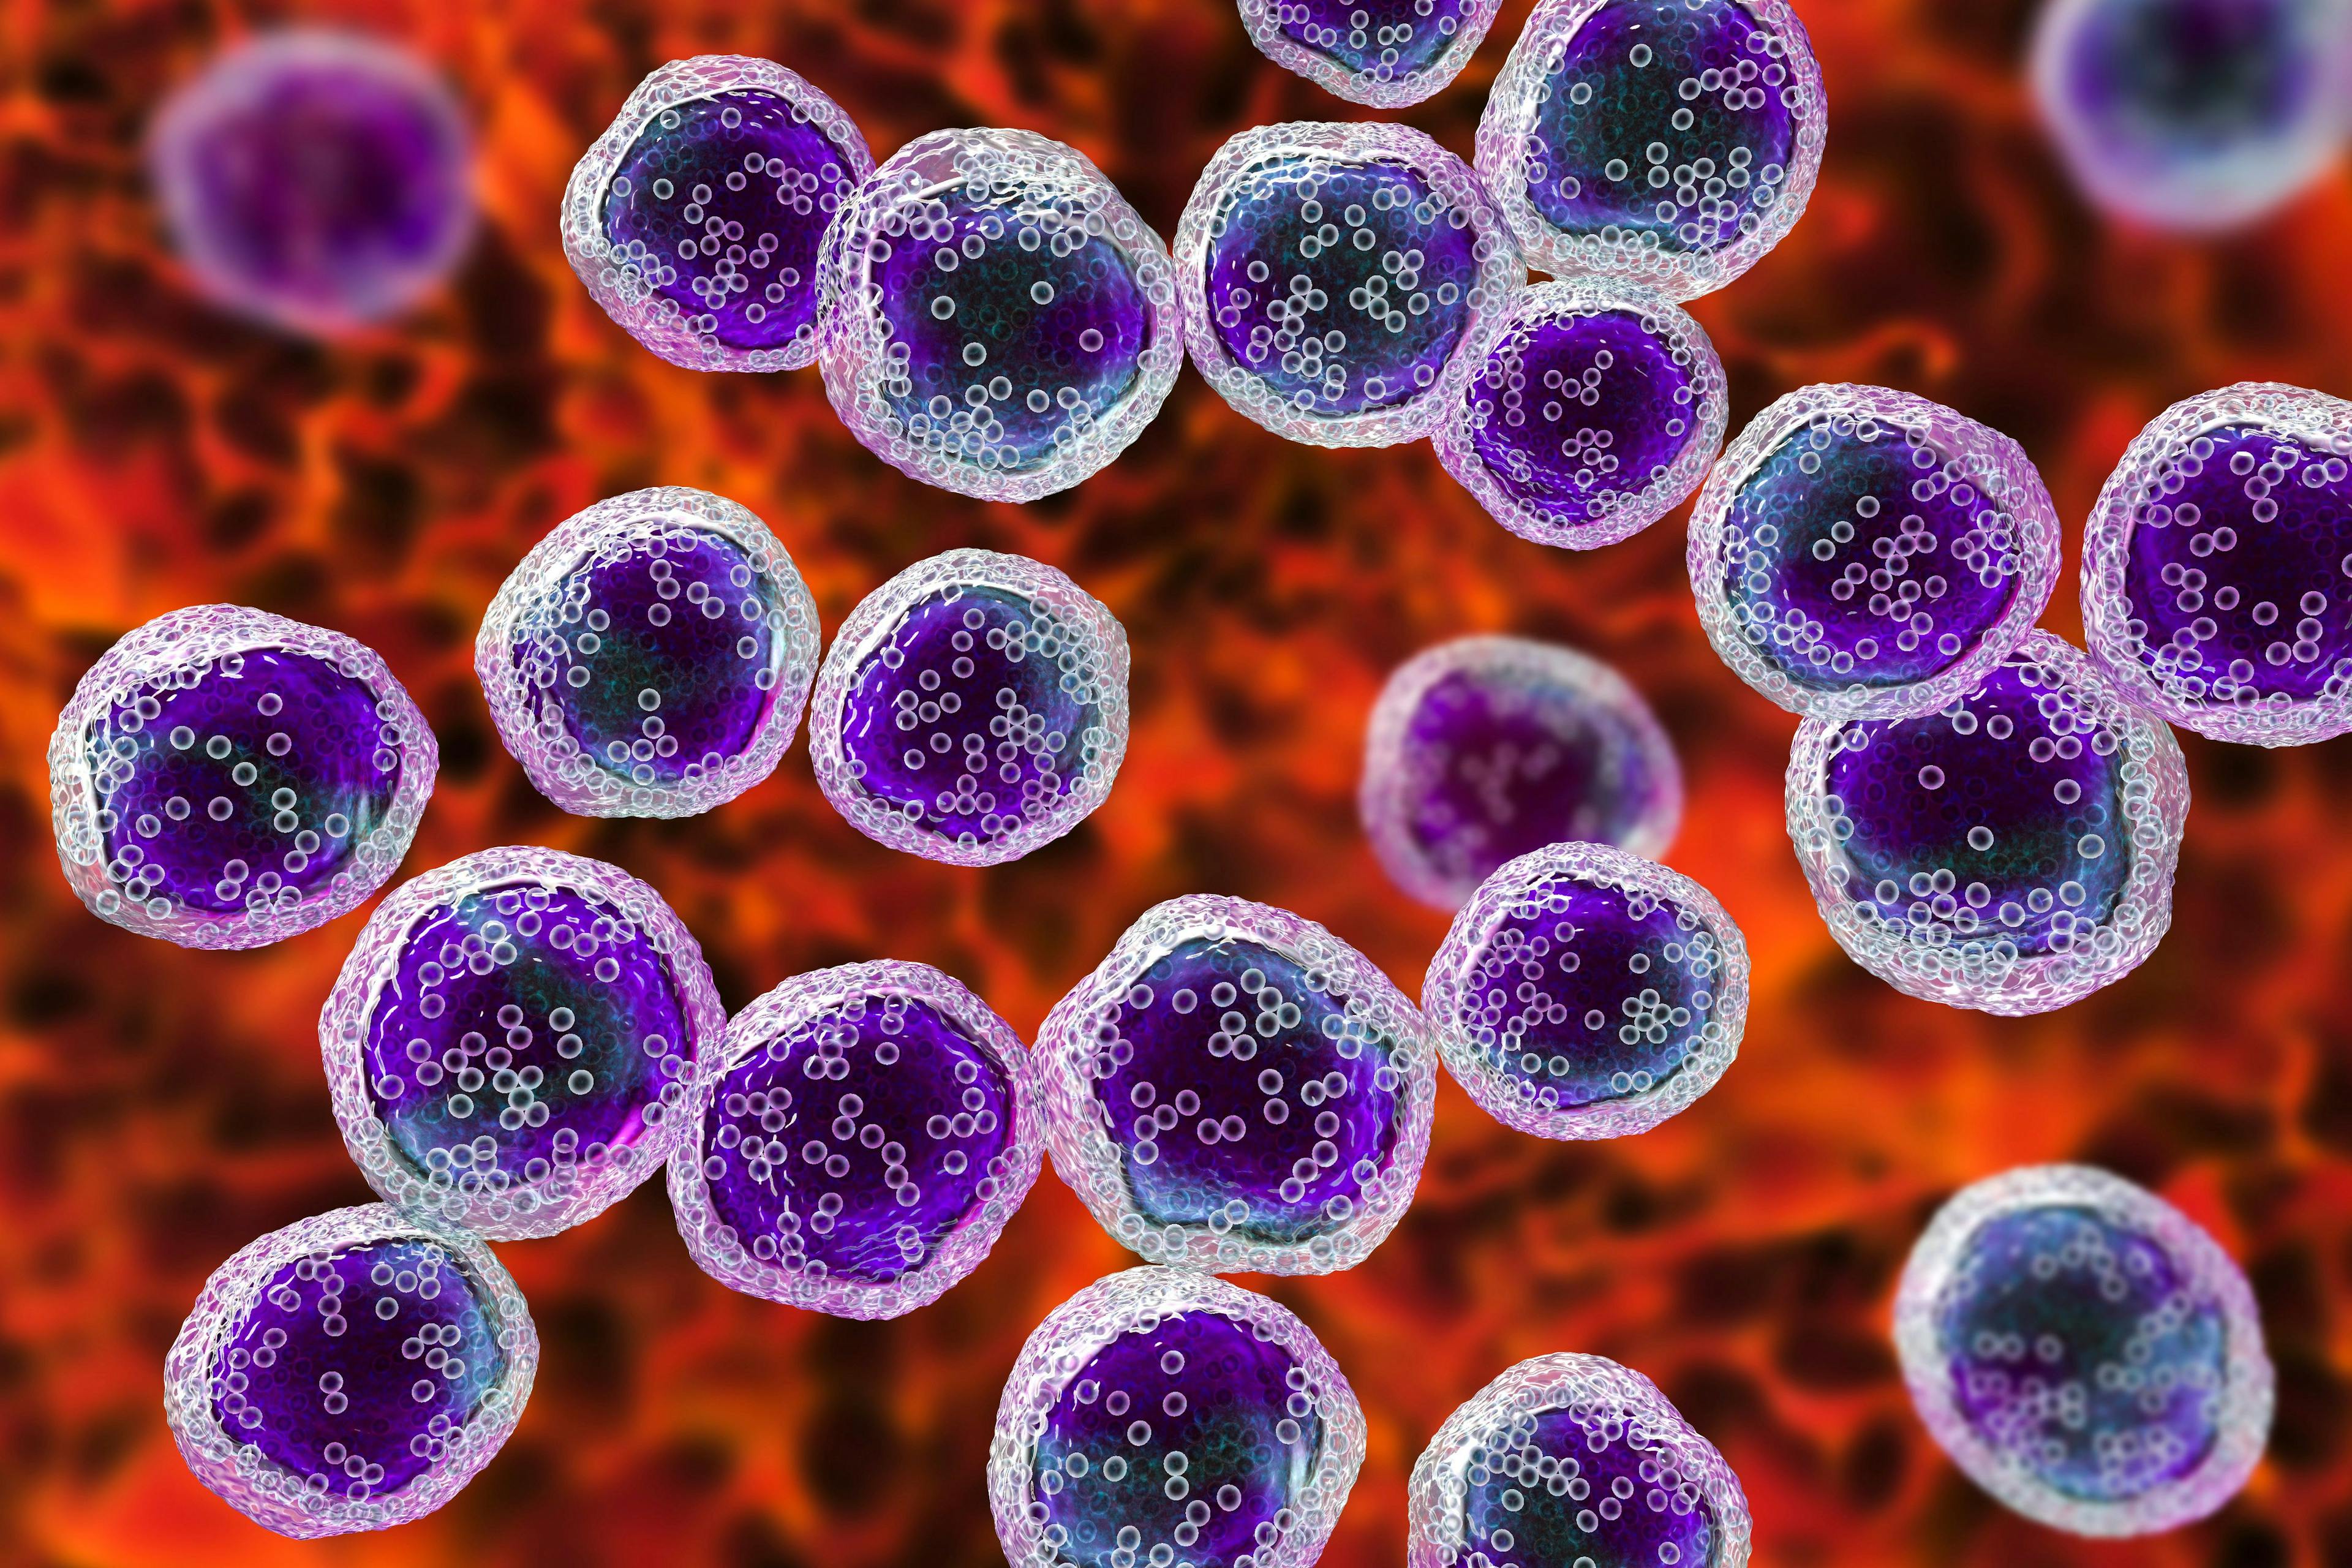 lymphoma cells : © Dr_Microbe - stock.adobe.com